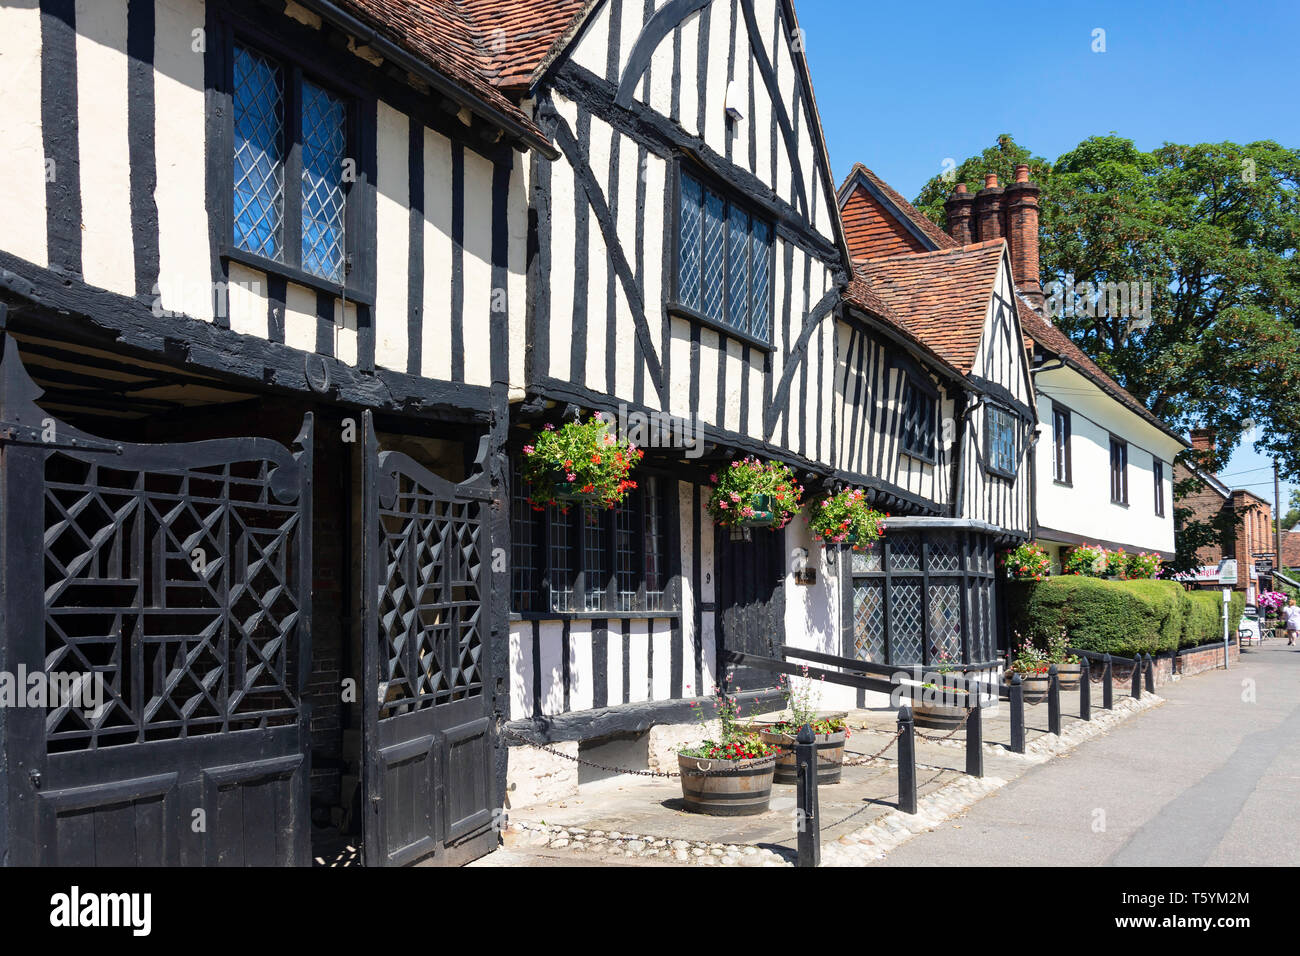 Tudor timber-framed building, Lower Street, Stansted Mountfitchet, Essex, England, United Kingdom Stock Photo